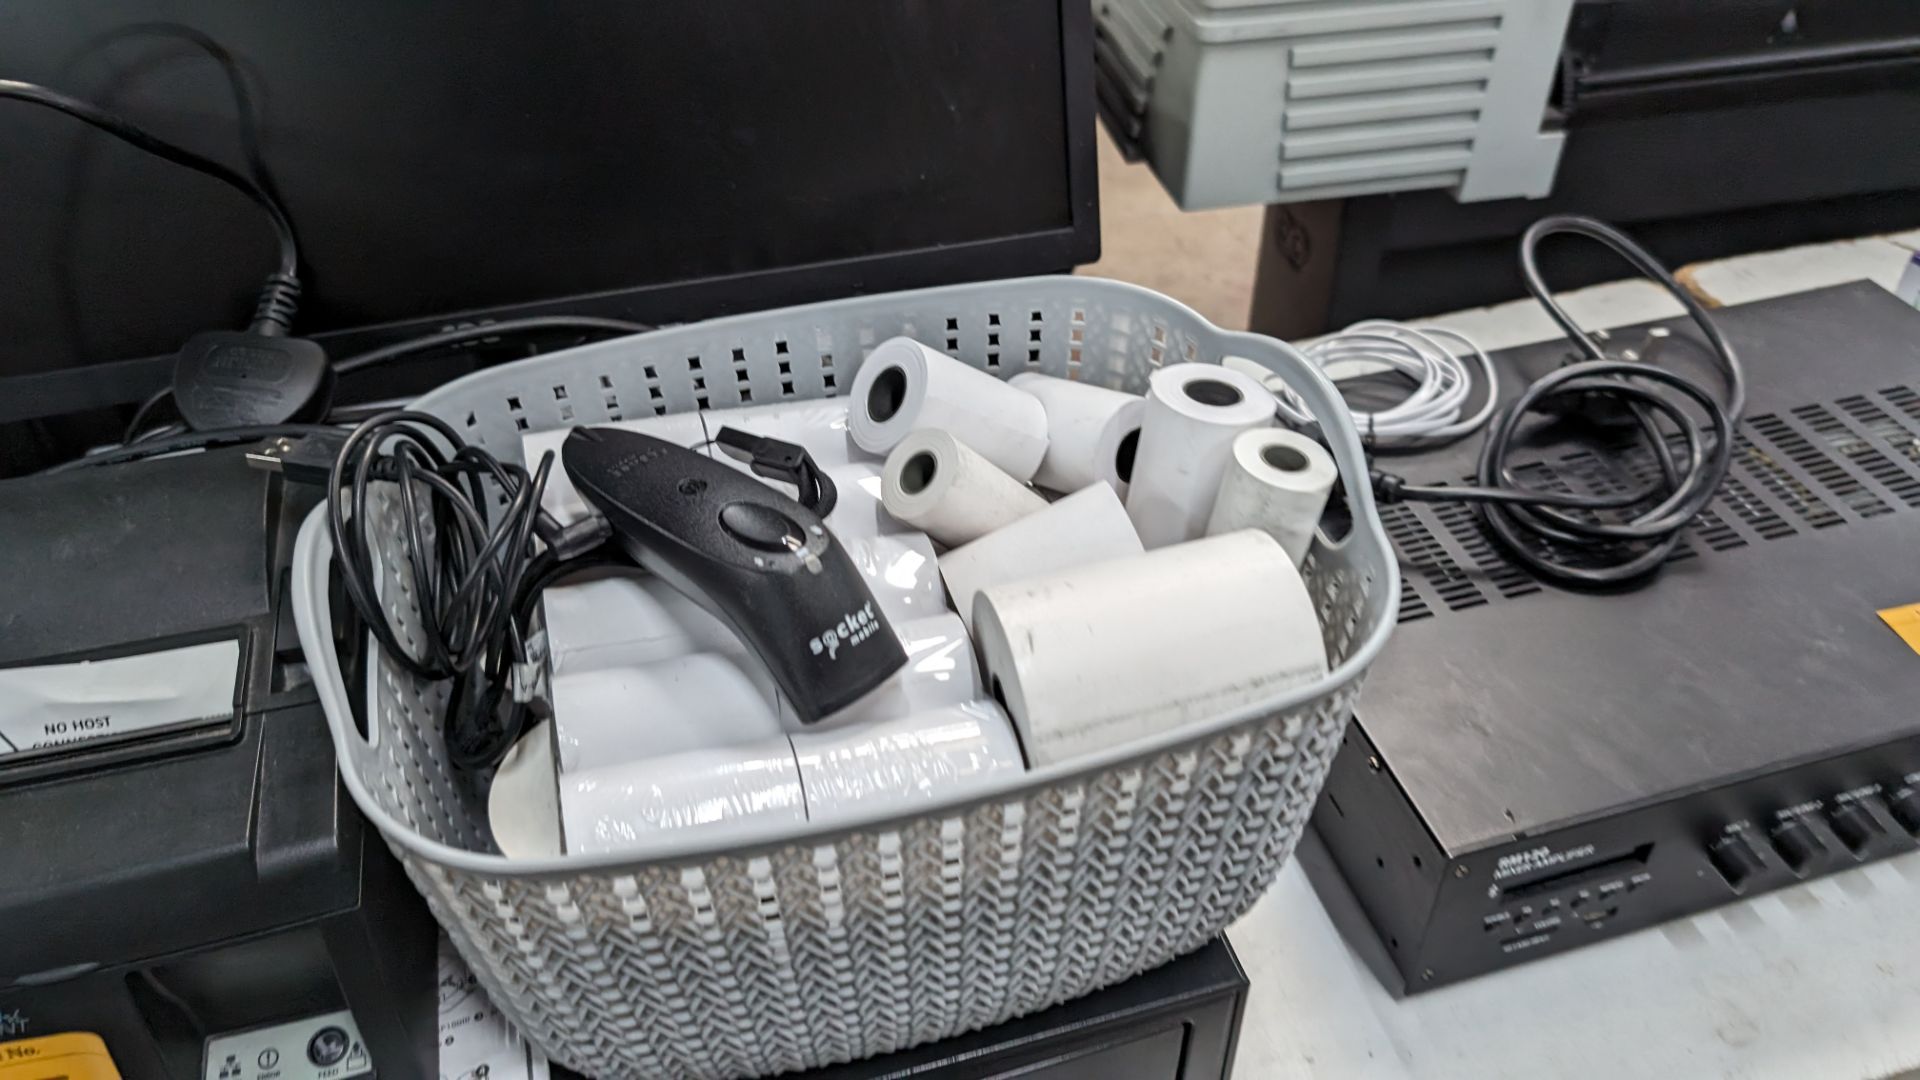 Epos equipment comprising cash drawer, Star thermal receipt printer, quantity of till roll, Socket m - Image 3 of 9